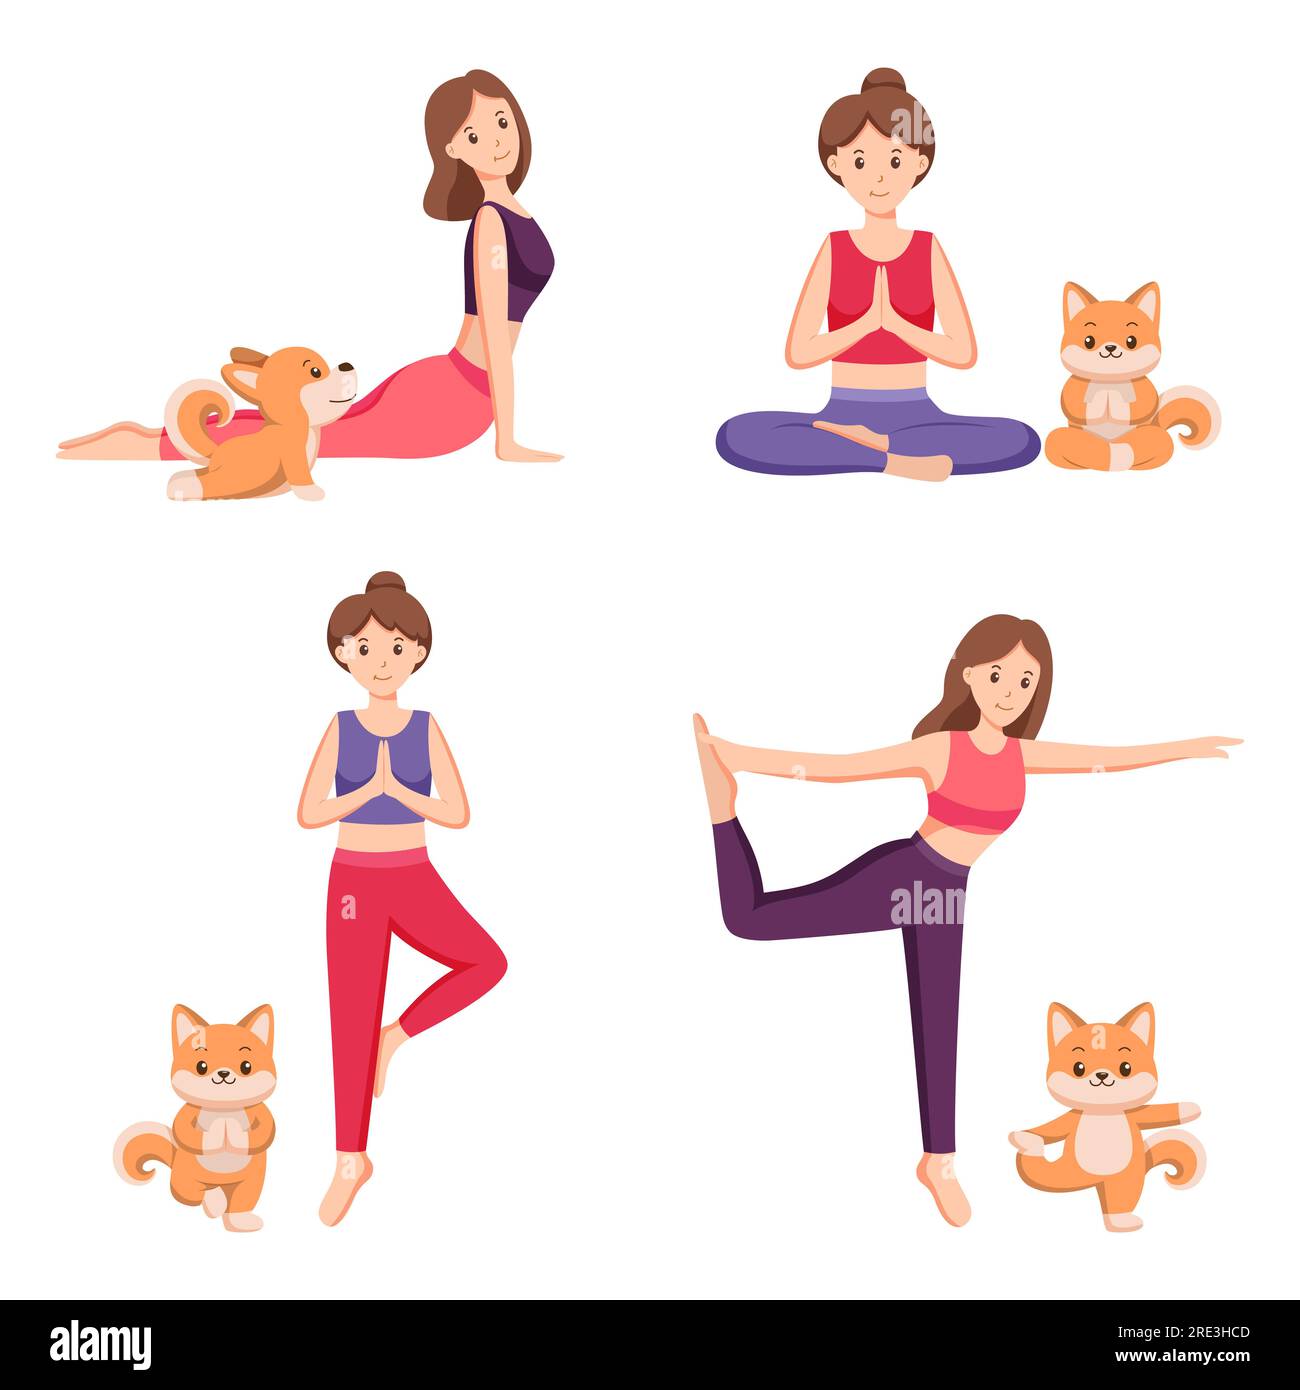 Illustration of men and women doing yoga pose exercises Stock Vector